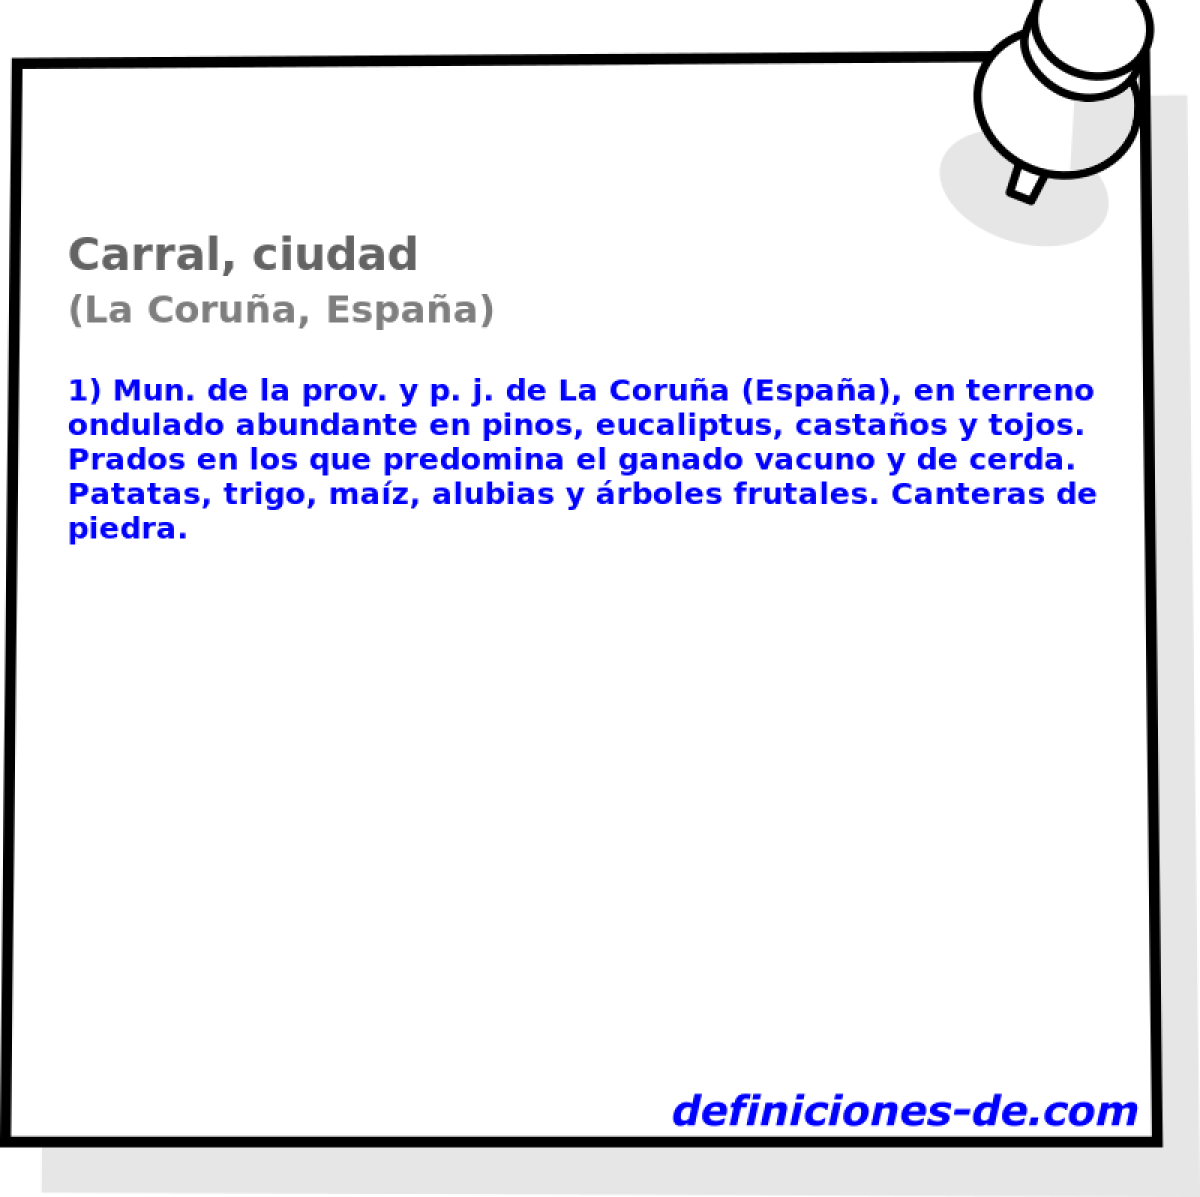 Carral, ciudad (La Corua, Espaa)